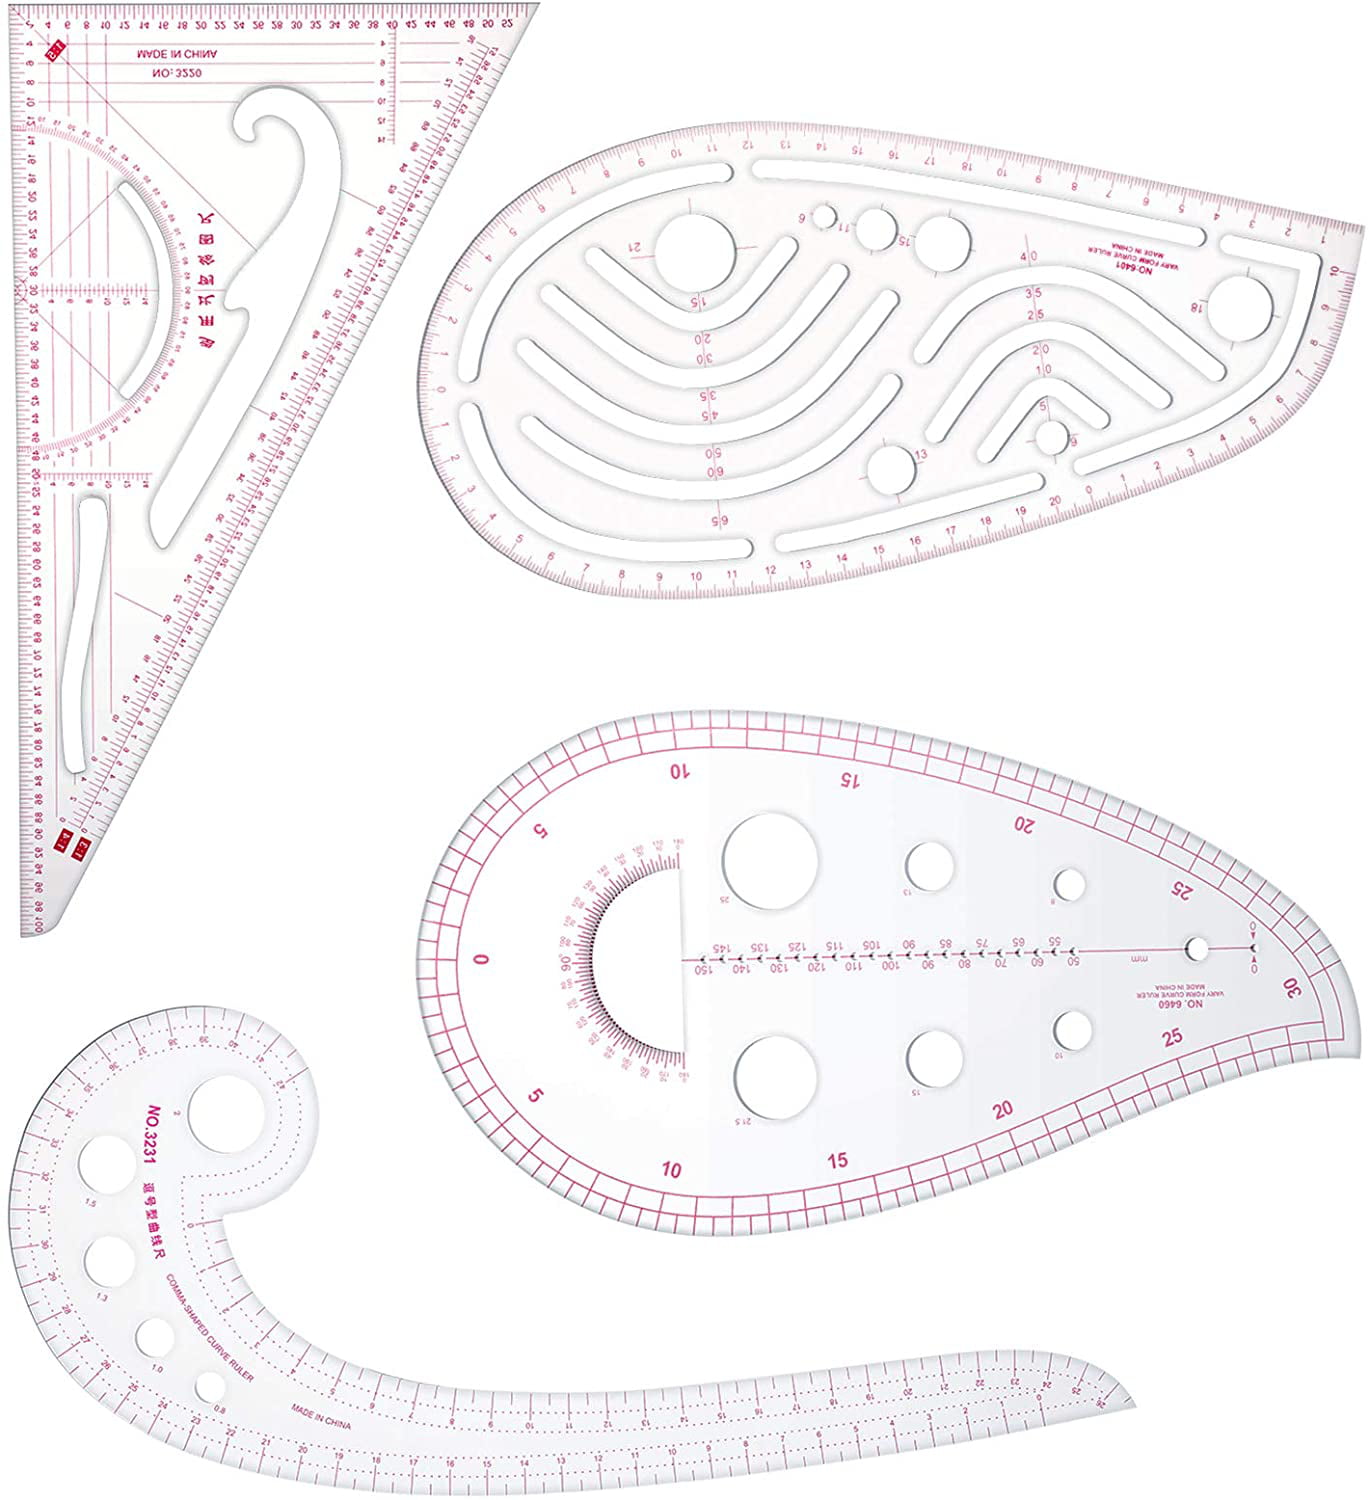 4 Pieces Curve Metric Shaped Ruler French Curve Sewing Ruler Beveled Transparent Ruler with Transparent File Bag for Sewing Dressmaking Pattern Design DIY Making Tailor Designers Tools 